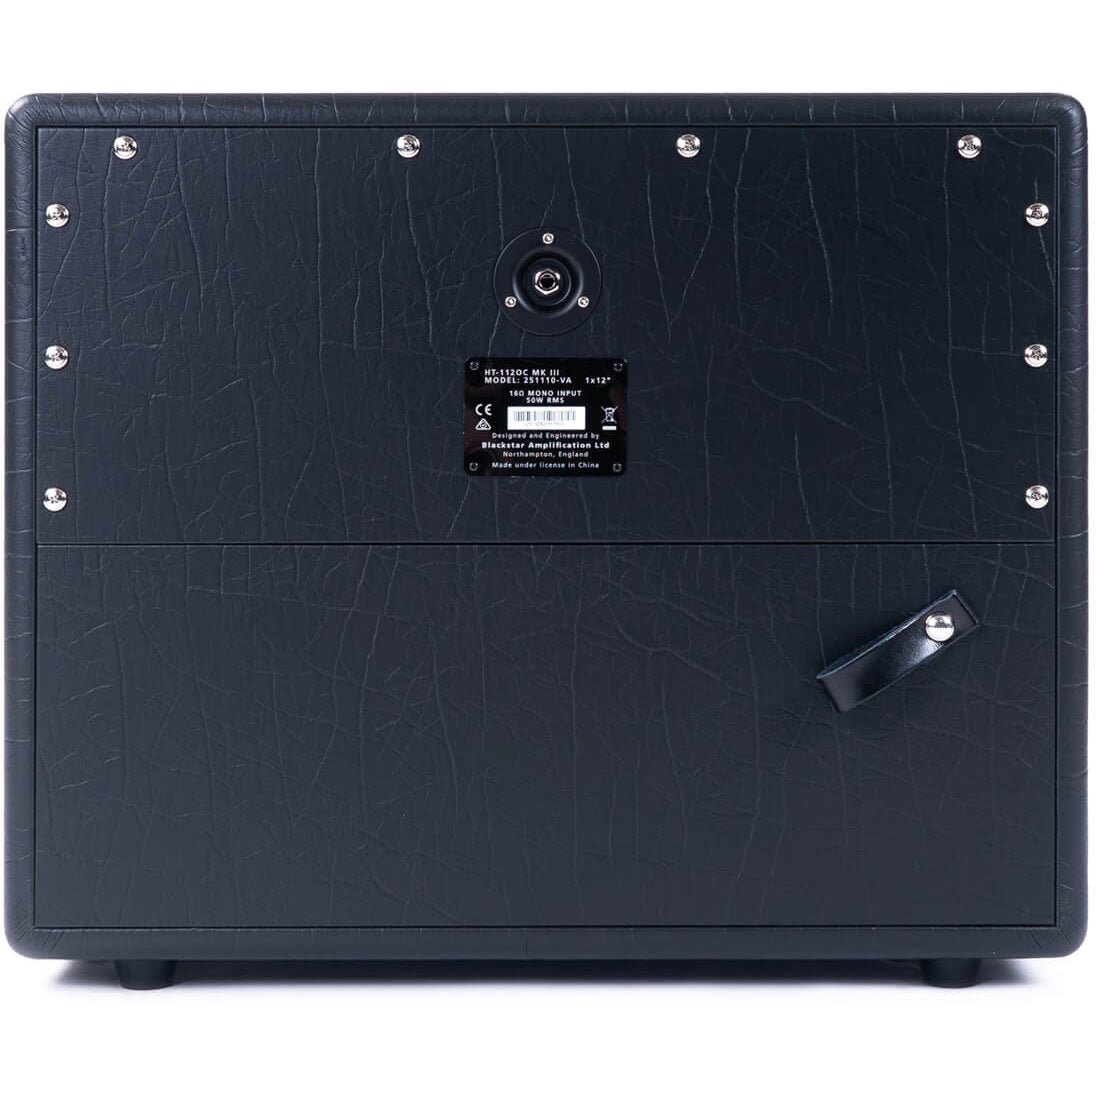 Blackstar HT-112OC MK3 1x12 Guitar Cabinet Amplifier